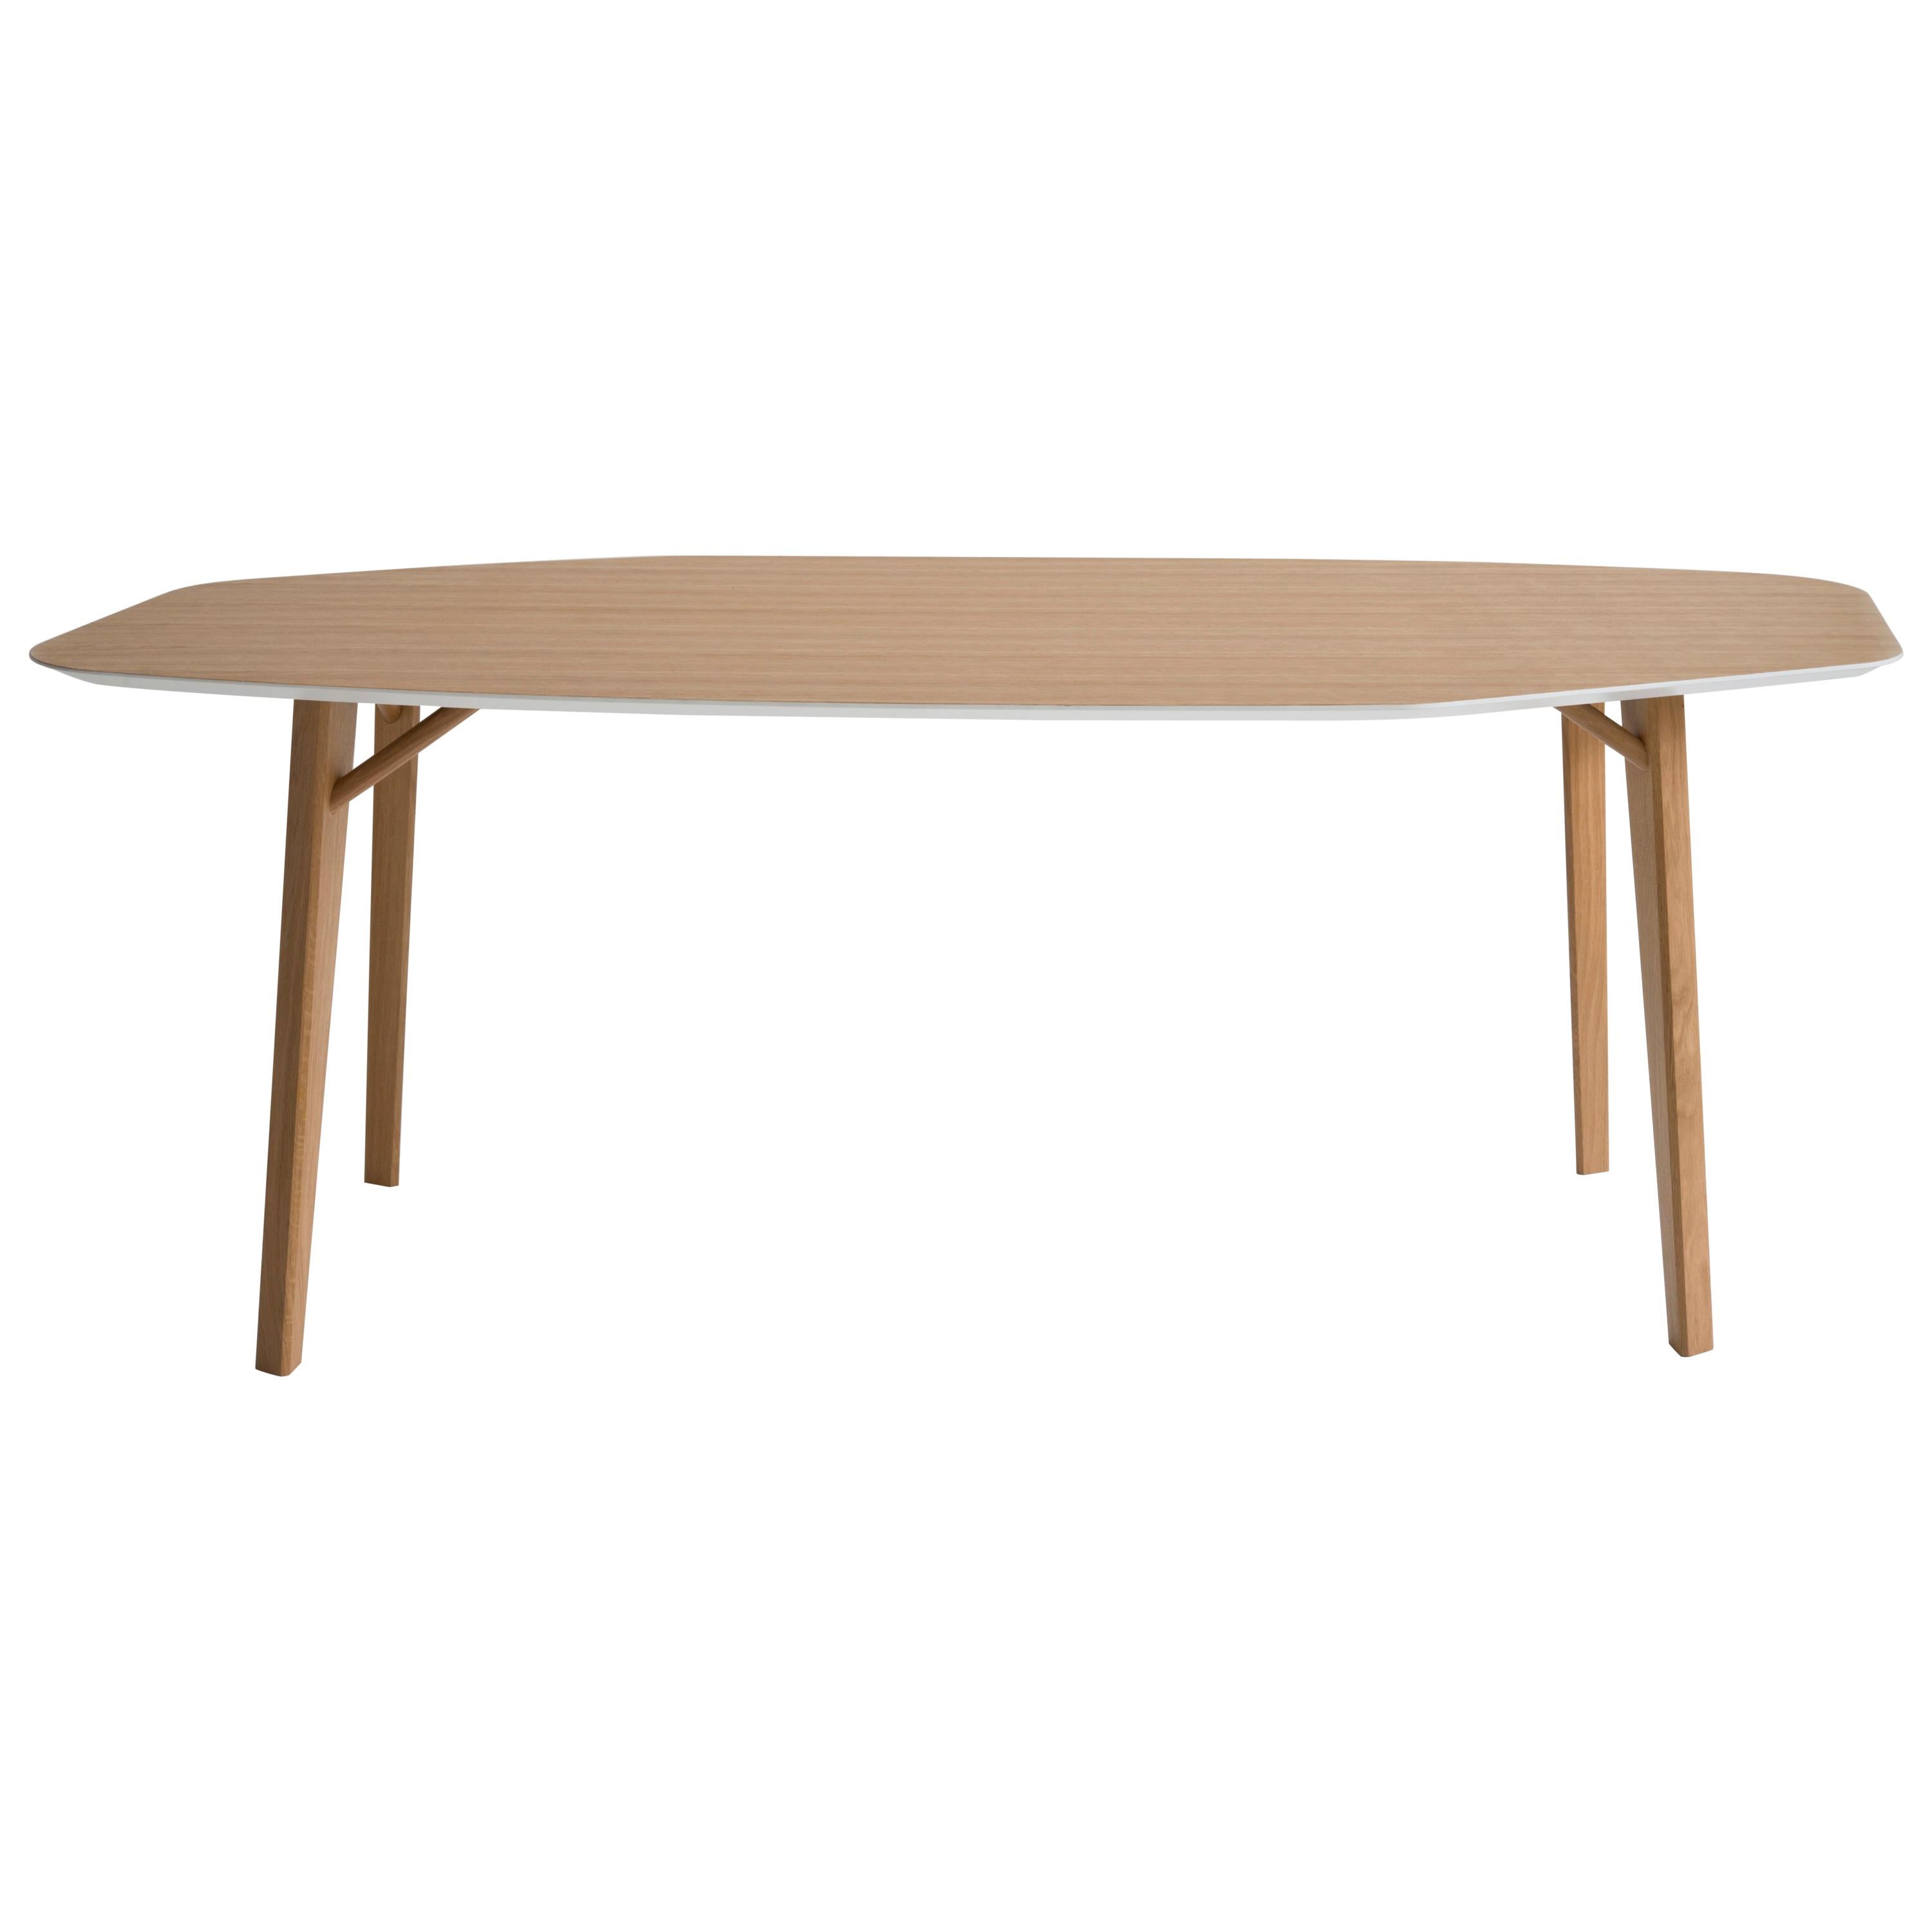 Tria Octa Table by Colé, Asymmetric Top, Solid Oak Legs, Modern Design Icon